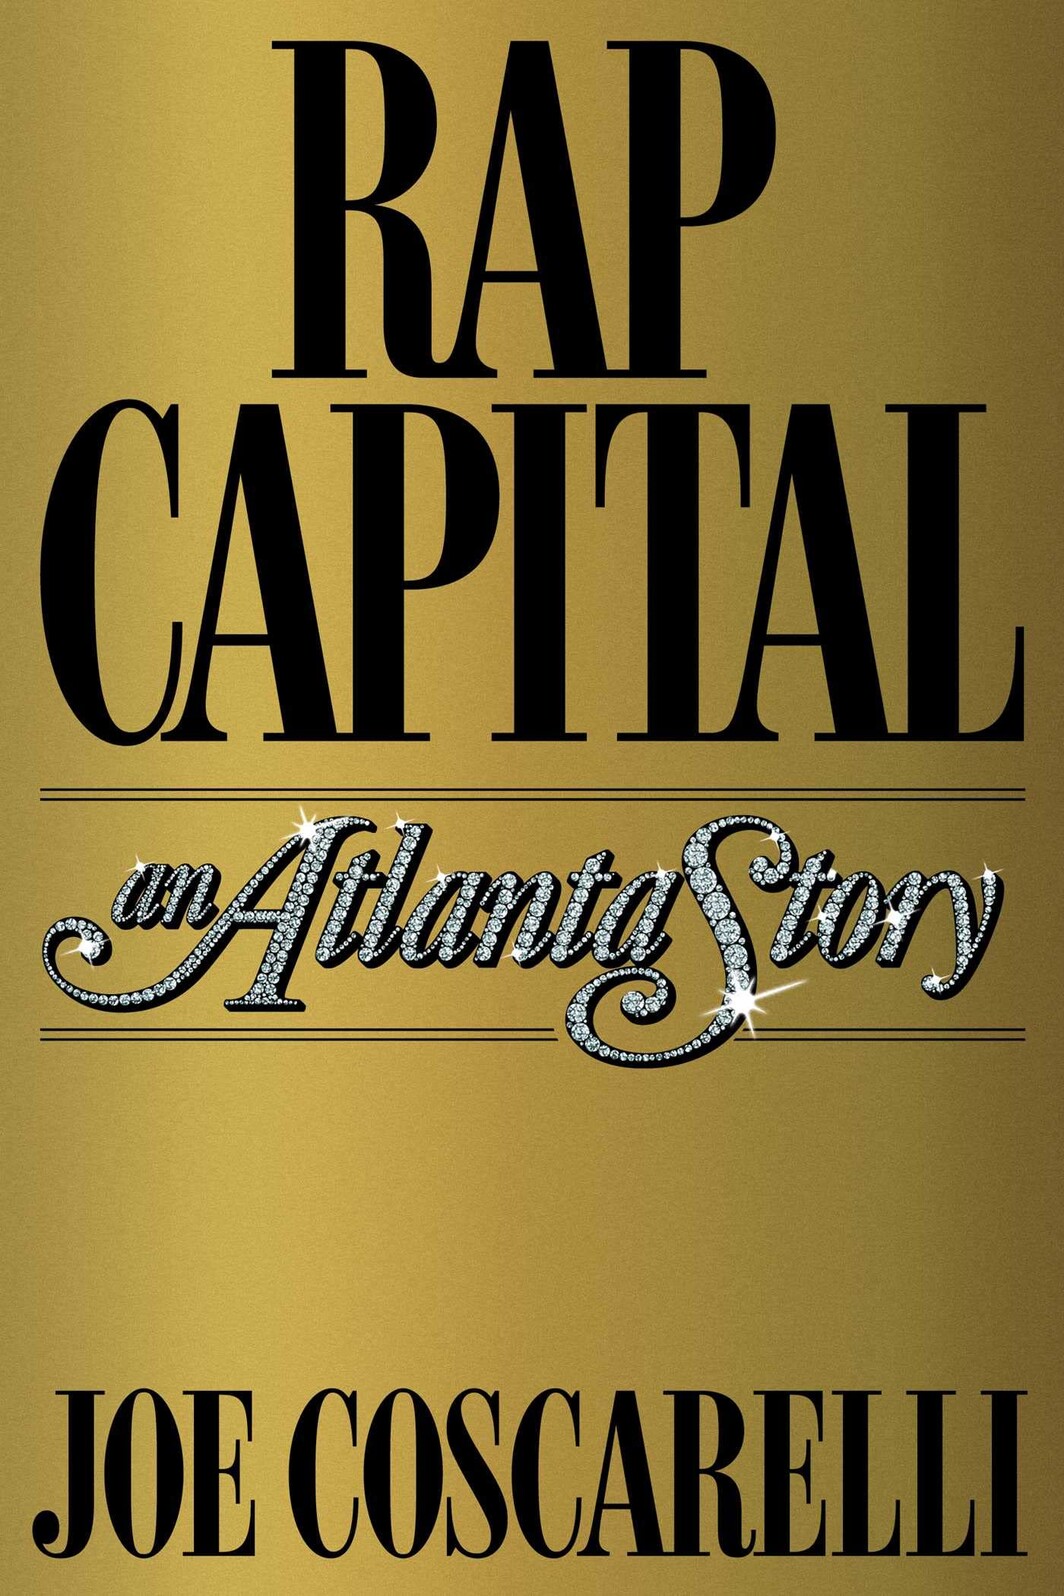 The cover of Rap Capital: An Atlanta Story